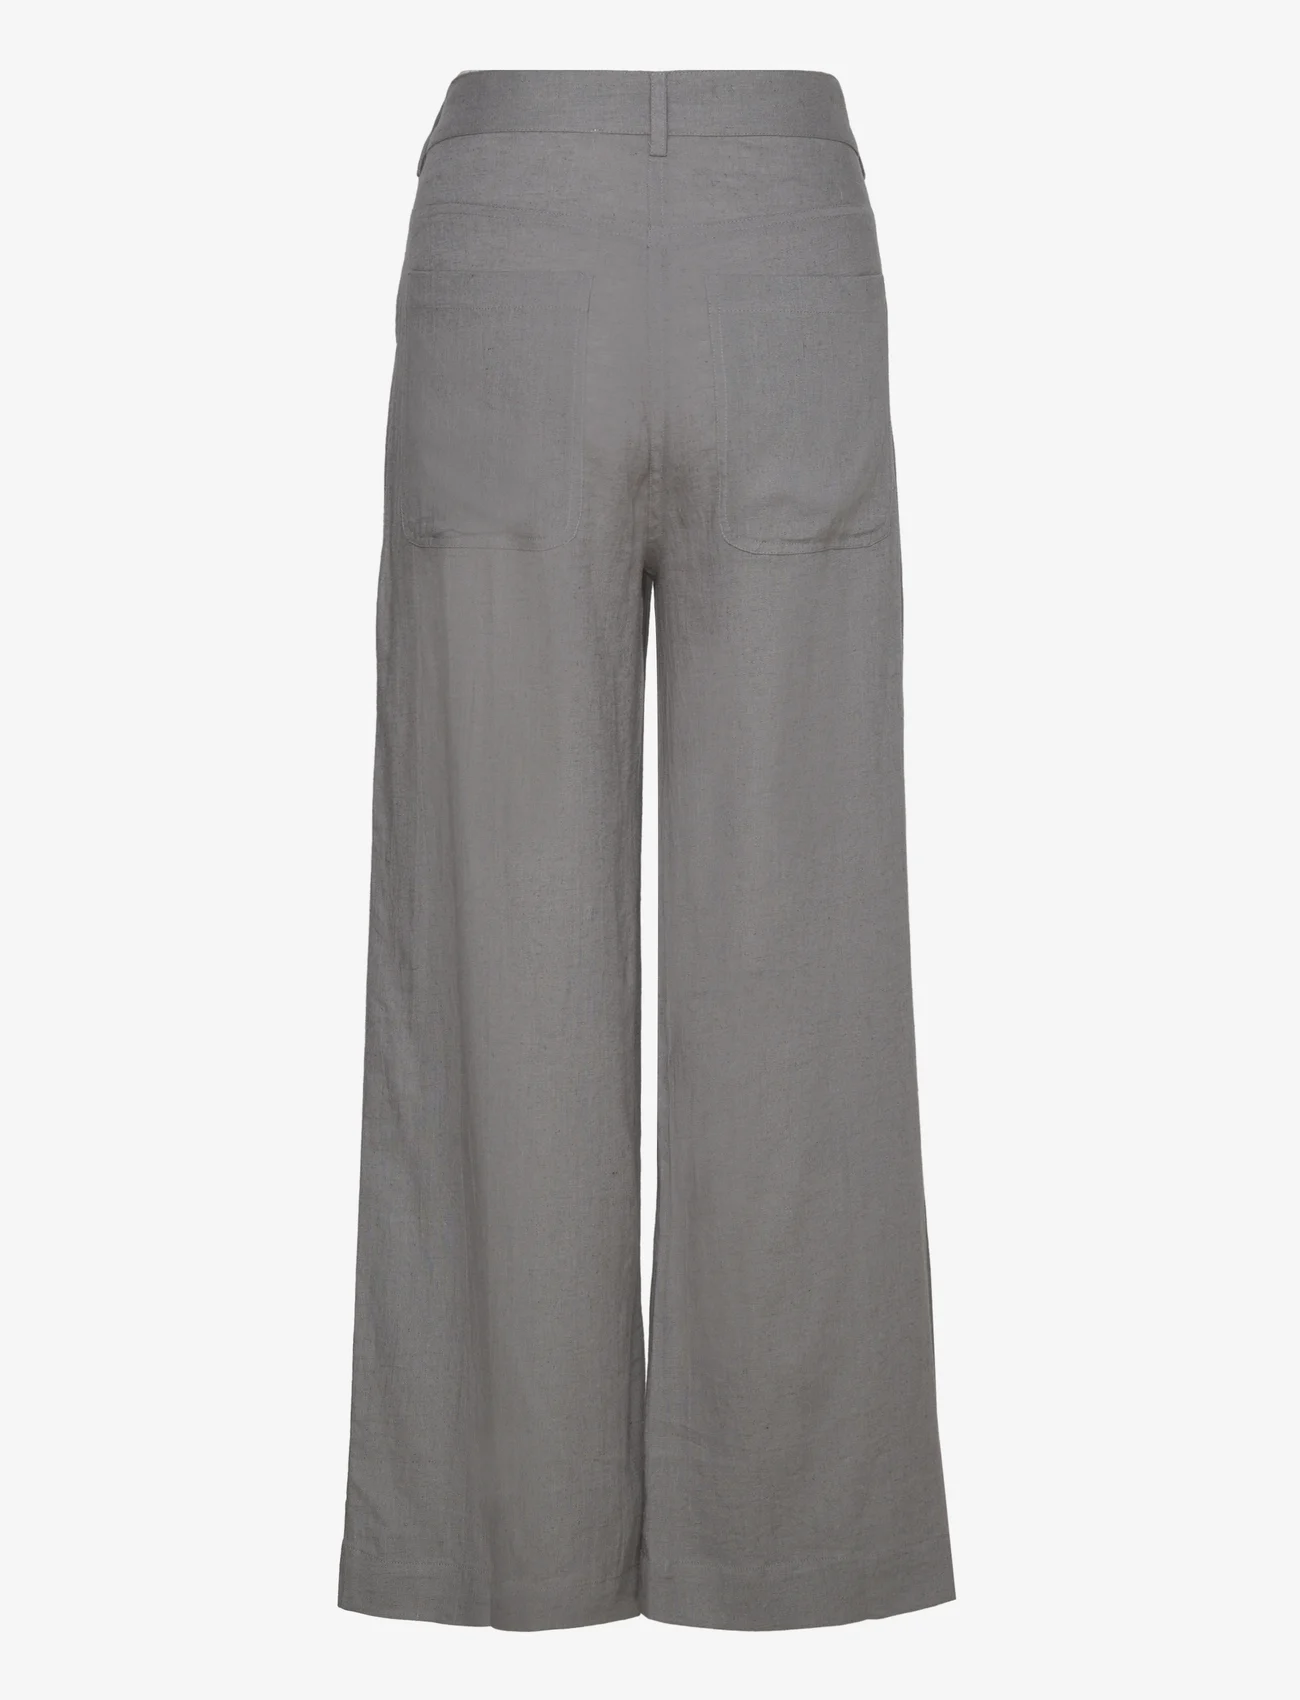 Sofie Schnoor - Trousers - spodnie lniane - steel grey - 1